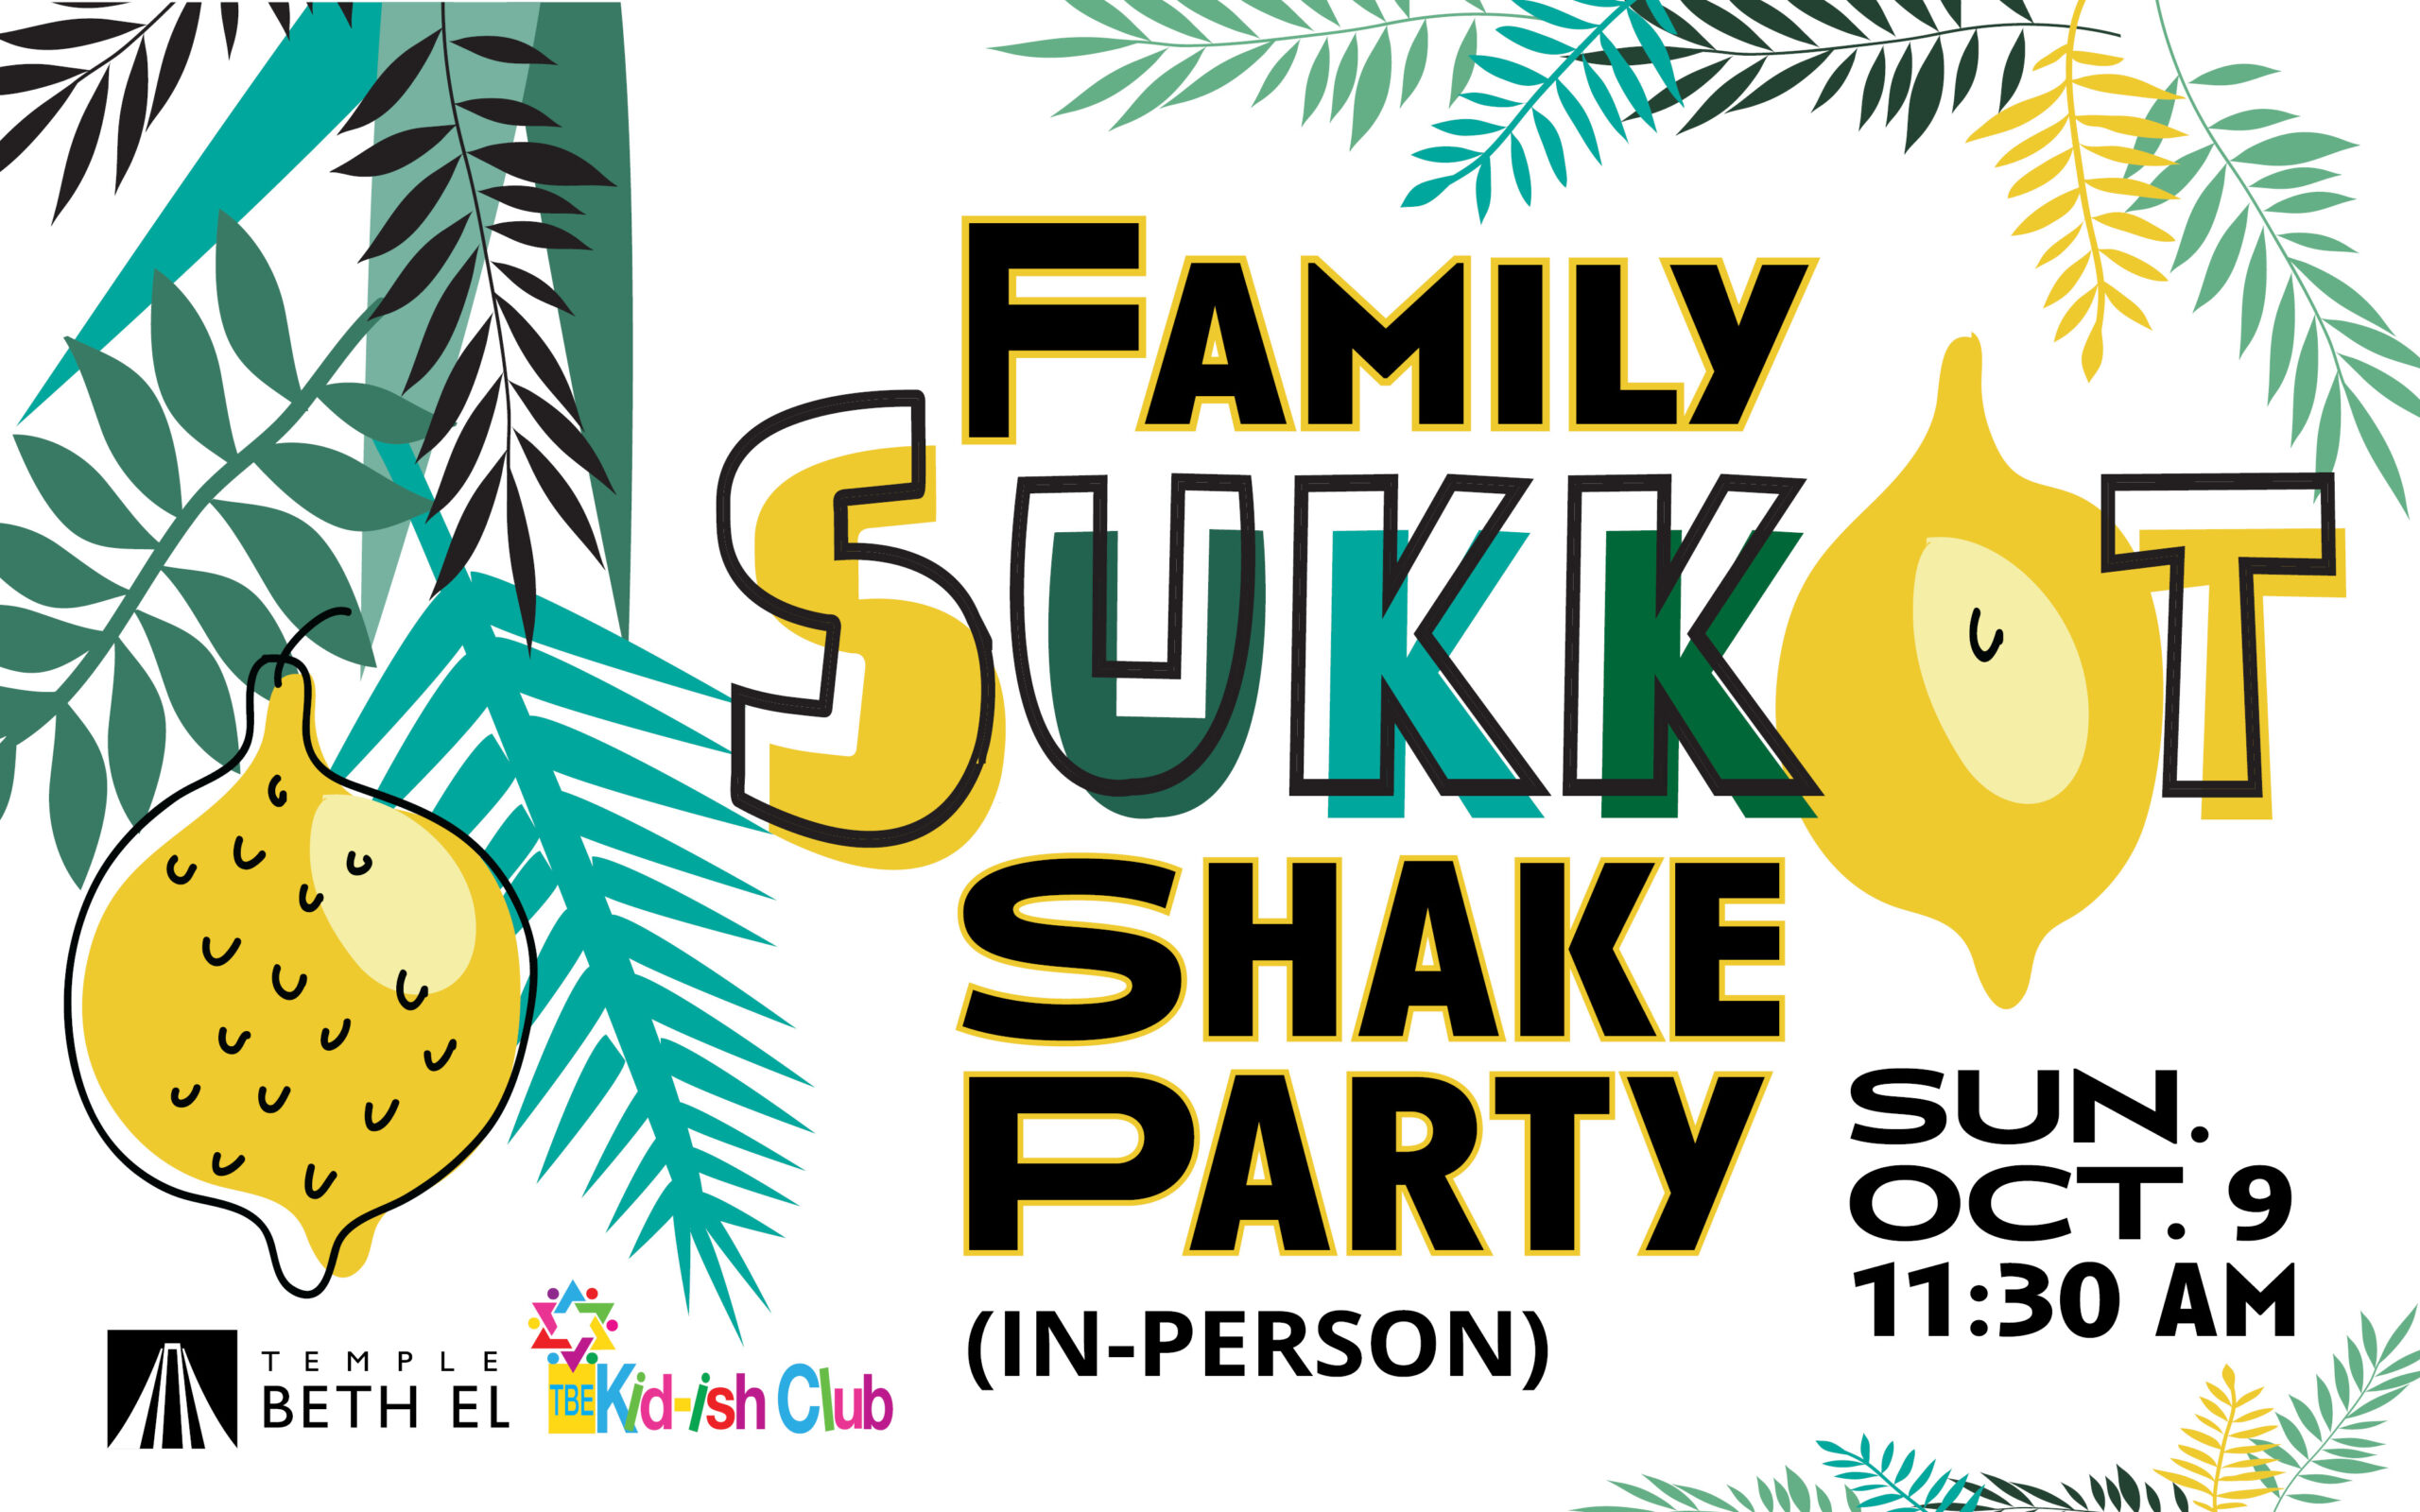 Family Sukkot Shake Party